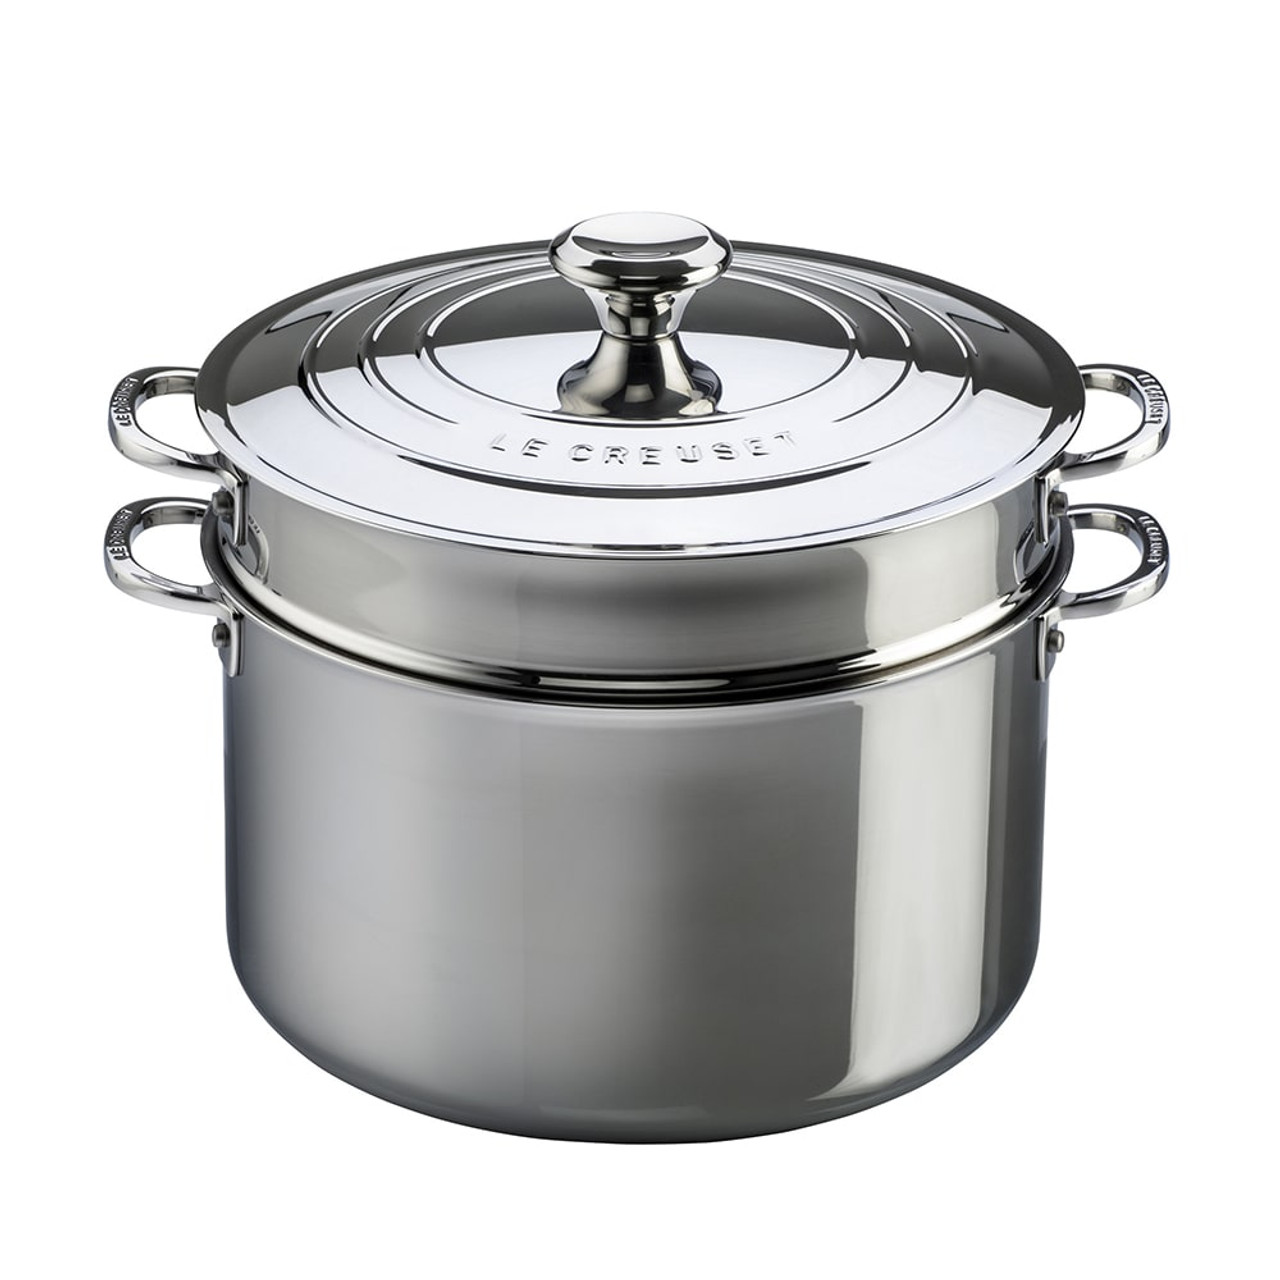 Le Creuset Stainless Steel Cookware Set — Kitchen Clique